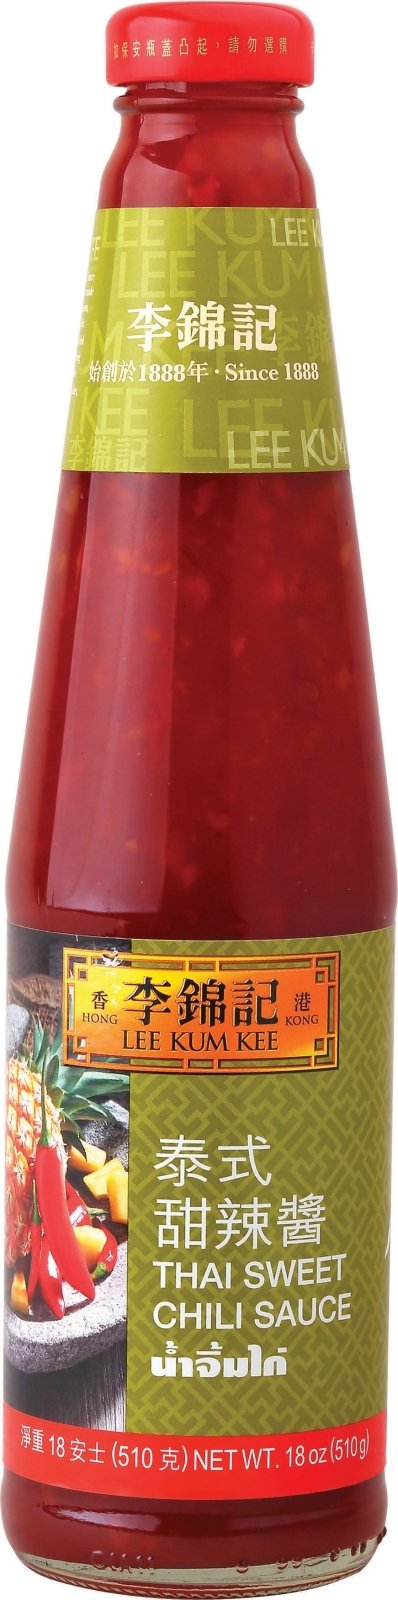 LEE KUM KEE Thai Sweet Chili Sauce 510g - MAOMAO